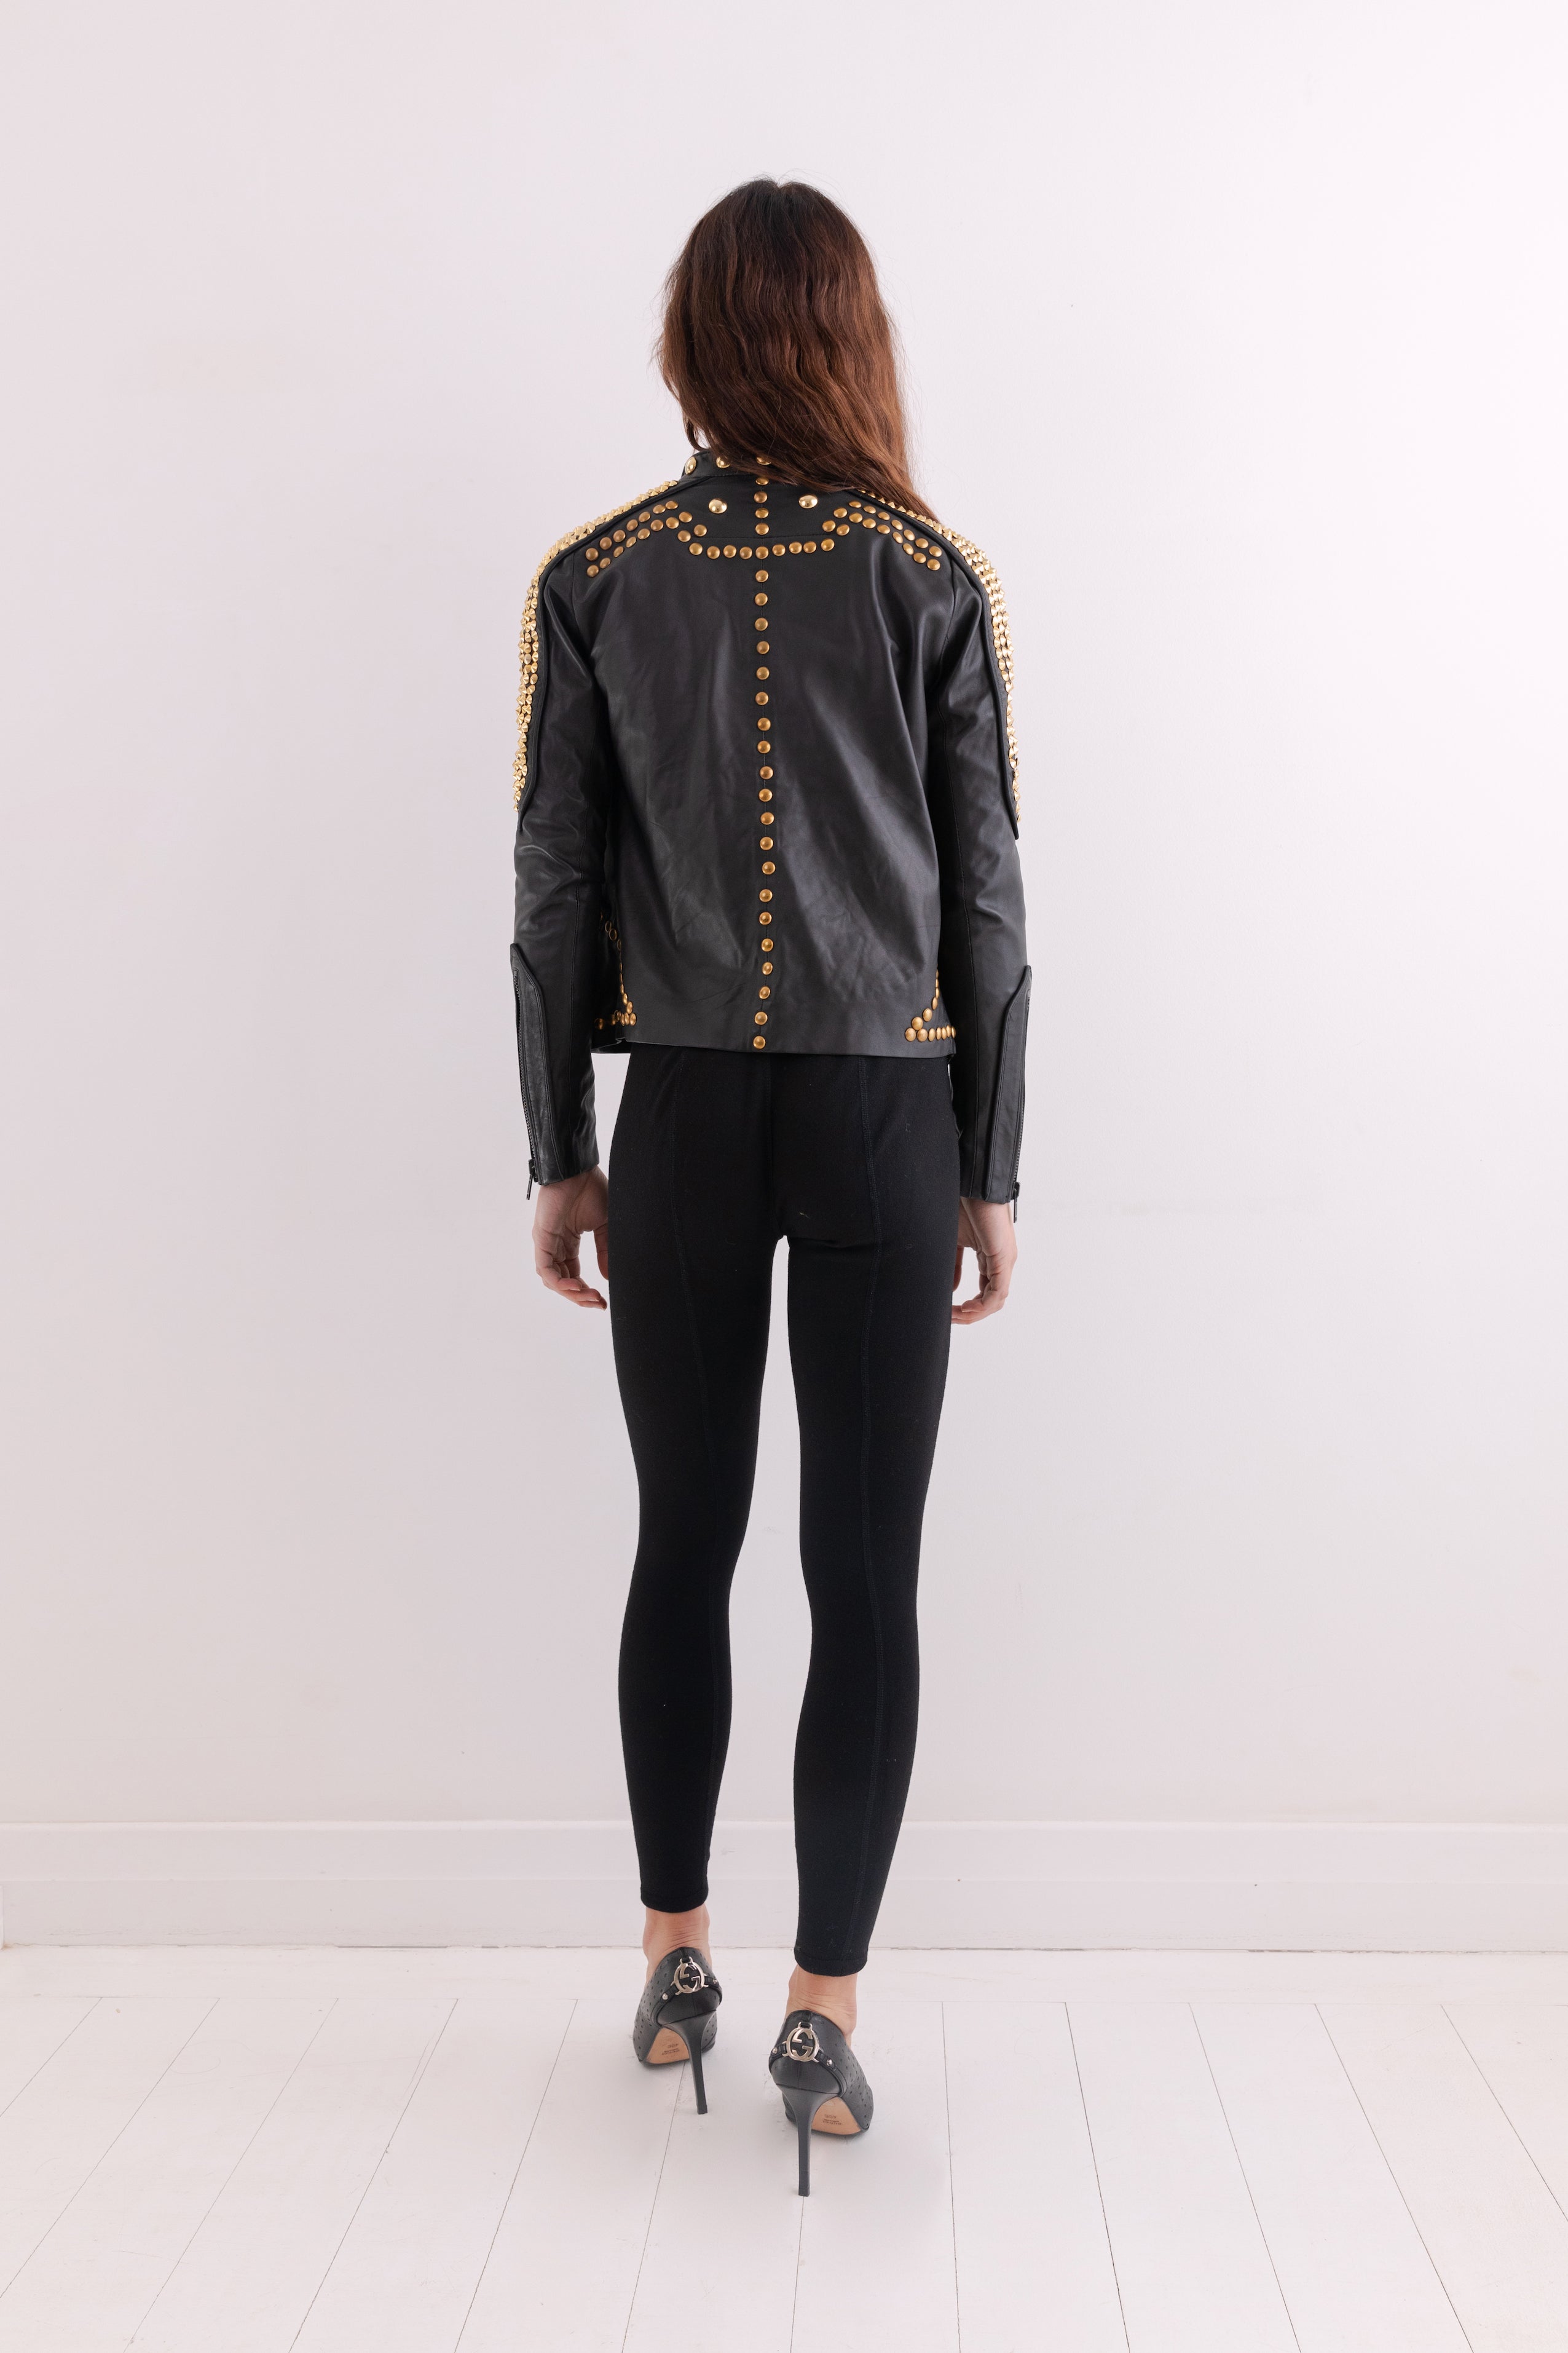 Givenchy <br> Resort 2010 studded leather jacket